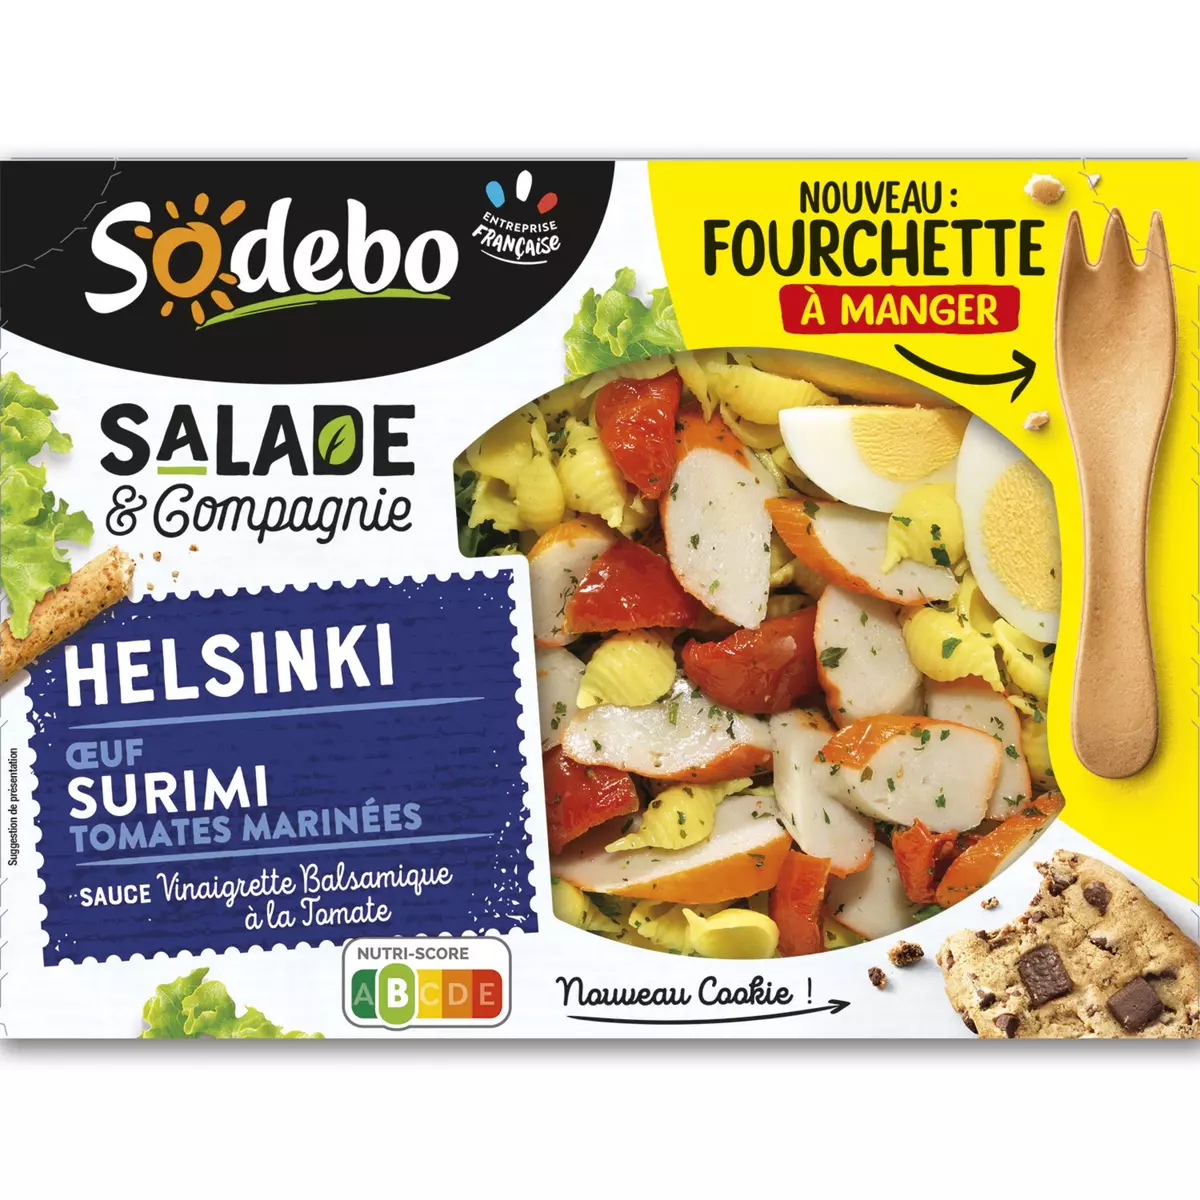 SODEBO Salade & compagnie Helsinki pâtes oeuf surimi et tomates marinées 1 portion 320g